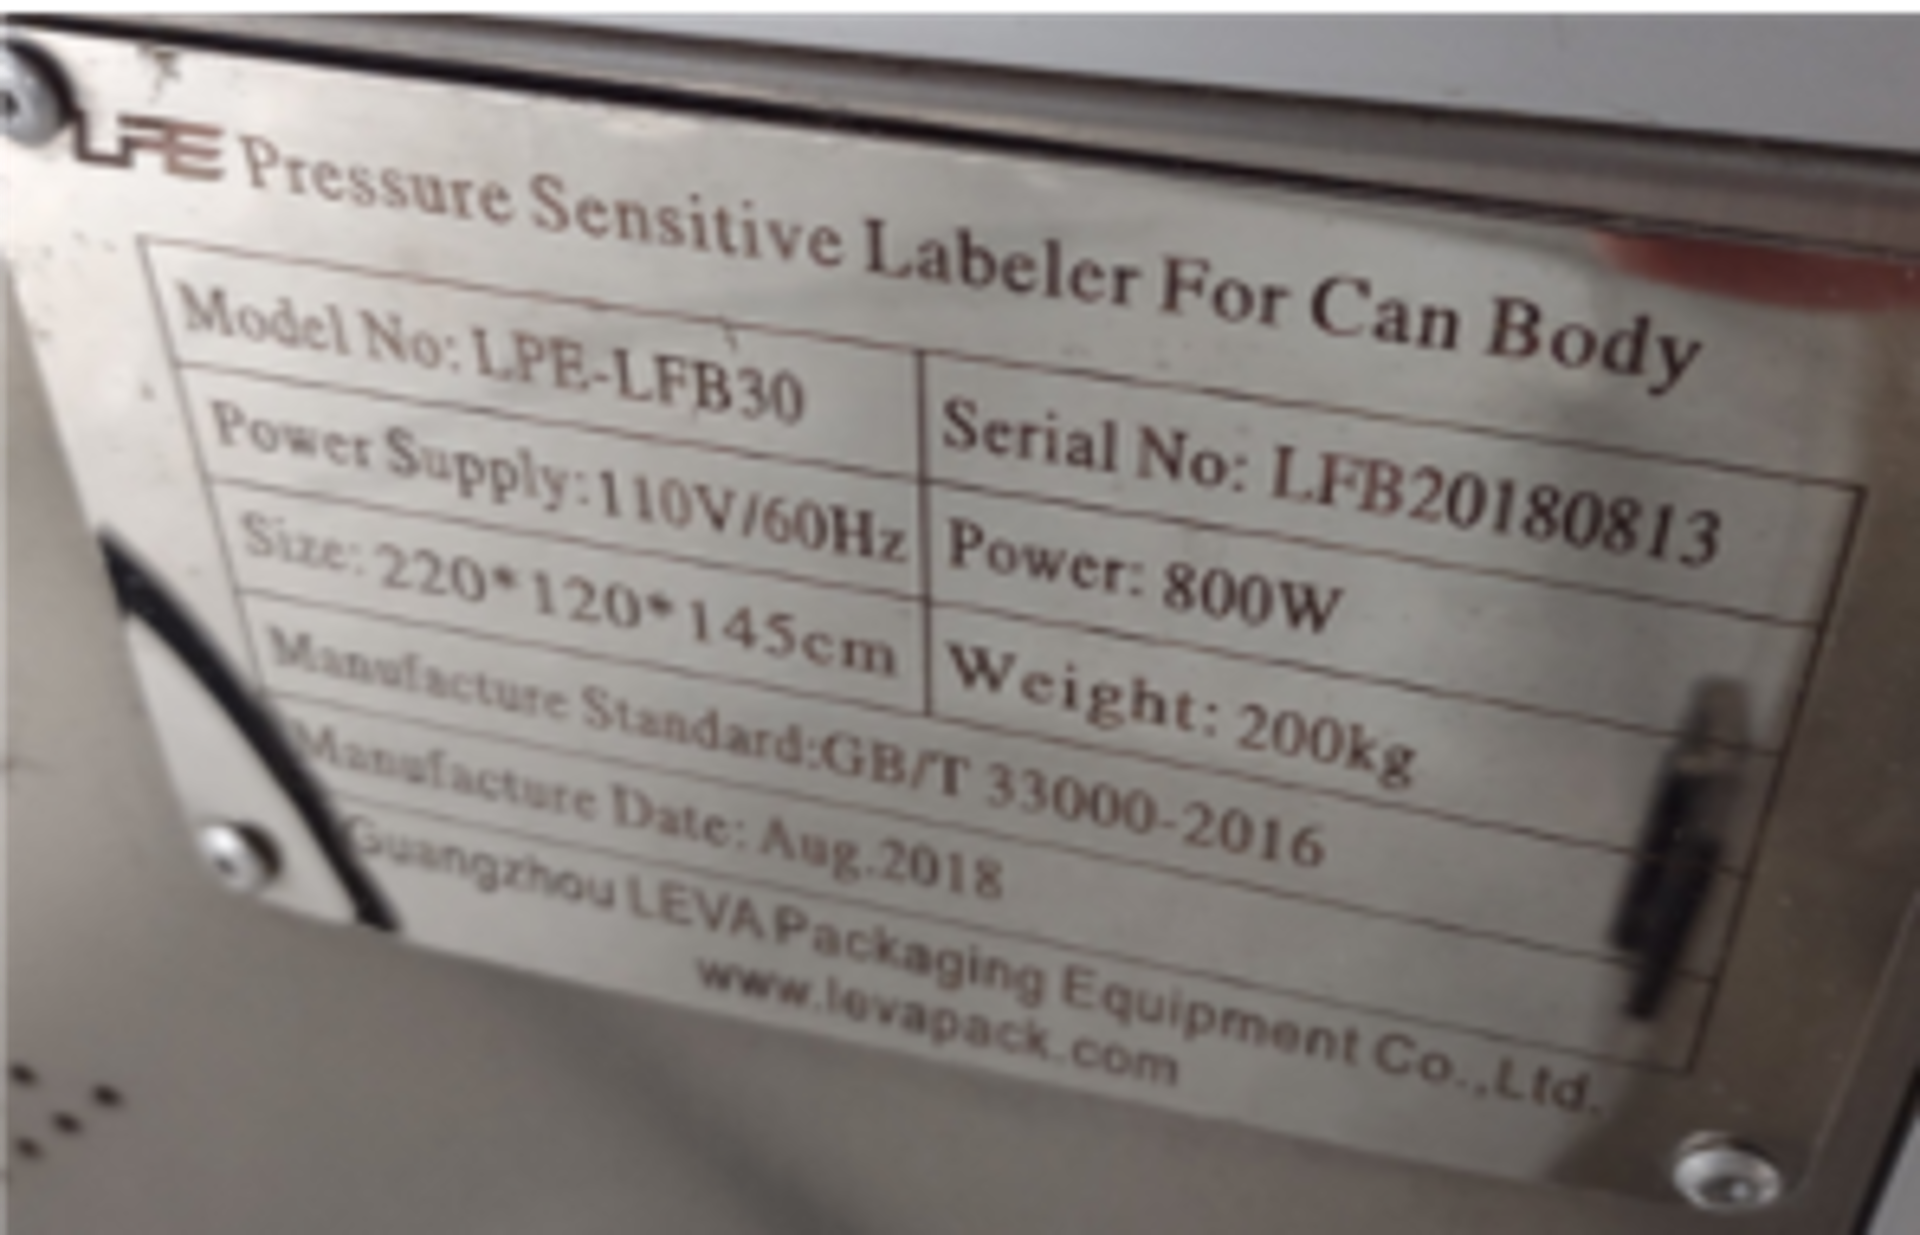 (Located in Evart, MI) LevaPack Pressure Sensitive Labeler For Can Body (Side Labeler), Model# LPE- - Bild 2 aus 2